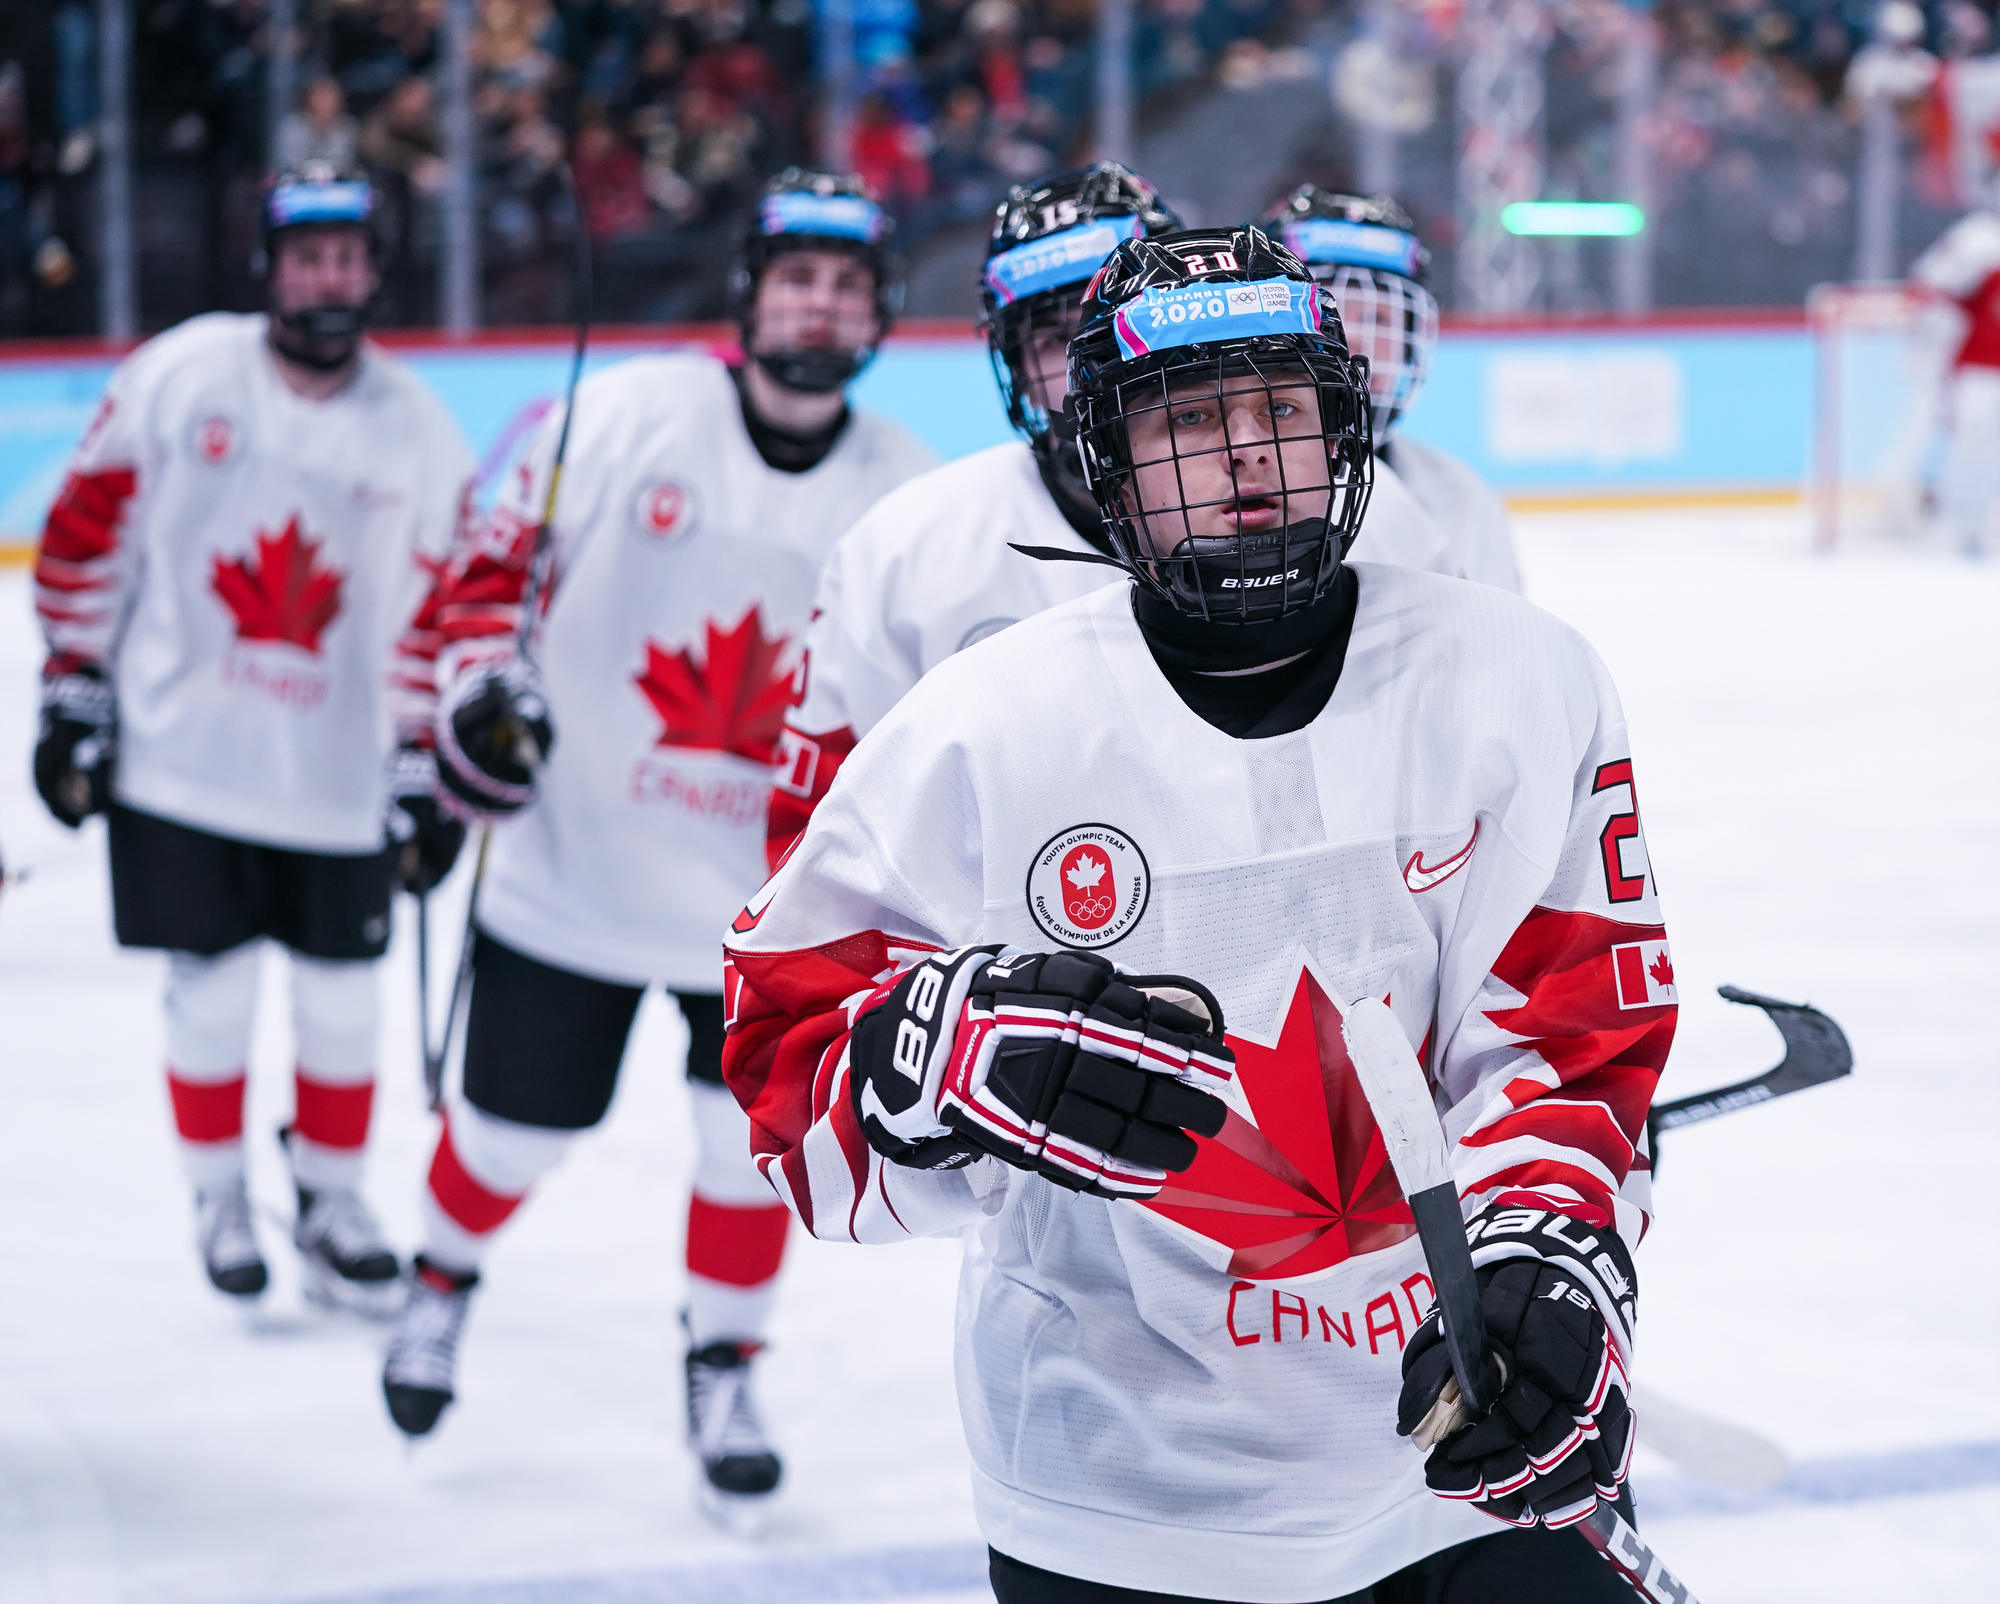 IIHF - Gallery: Denmark vs. Canada - 2020 Youth Olympic Games (Men)